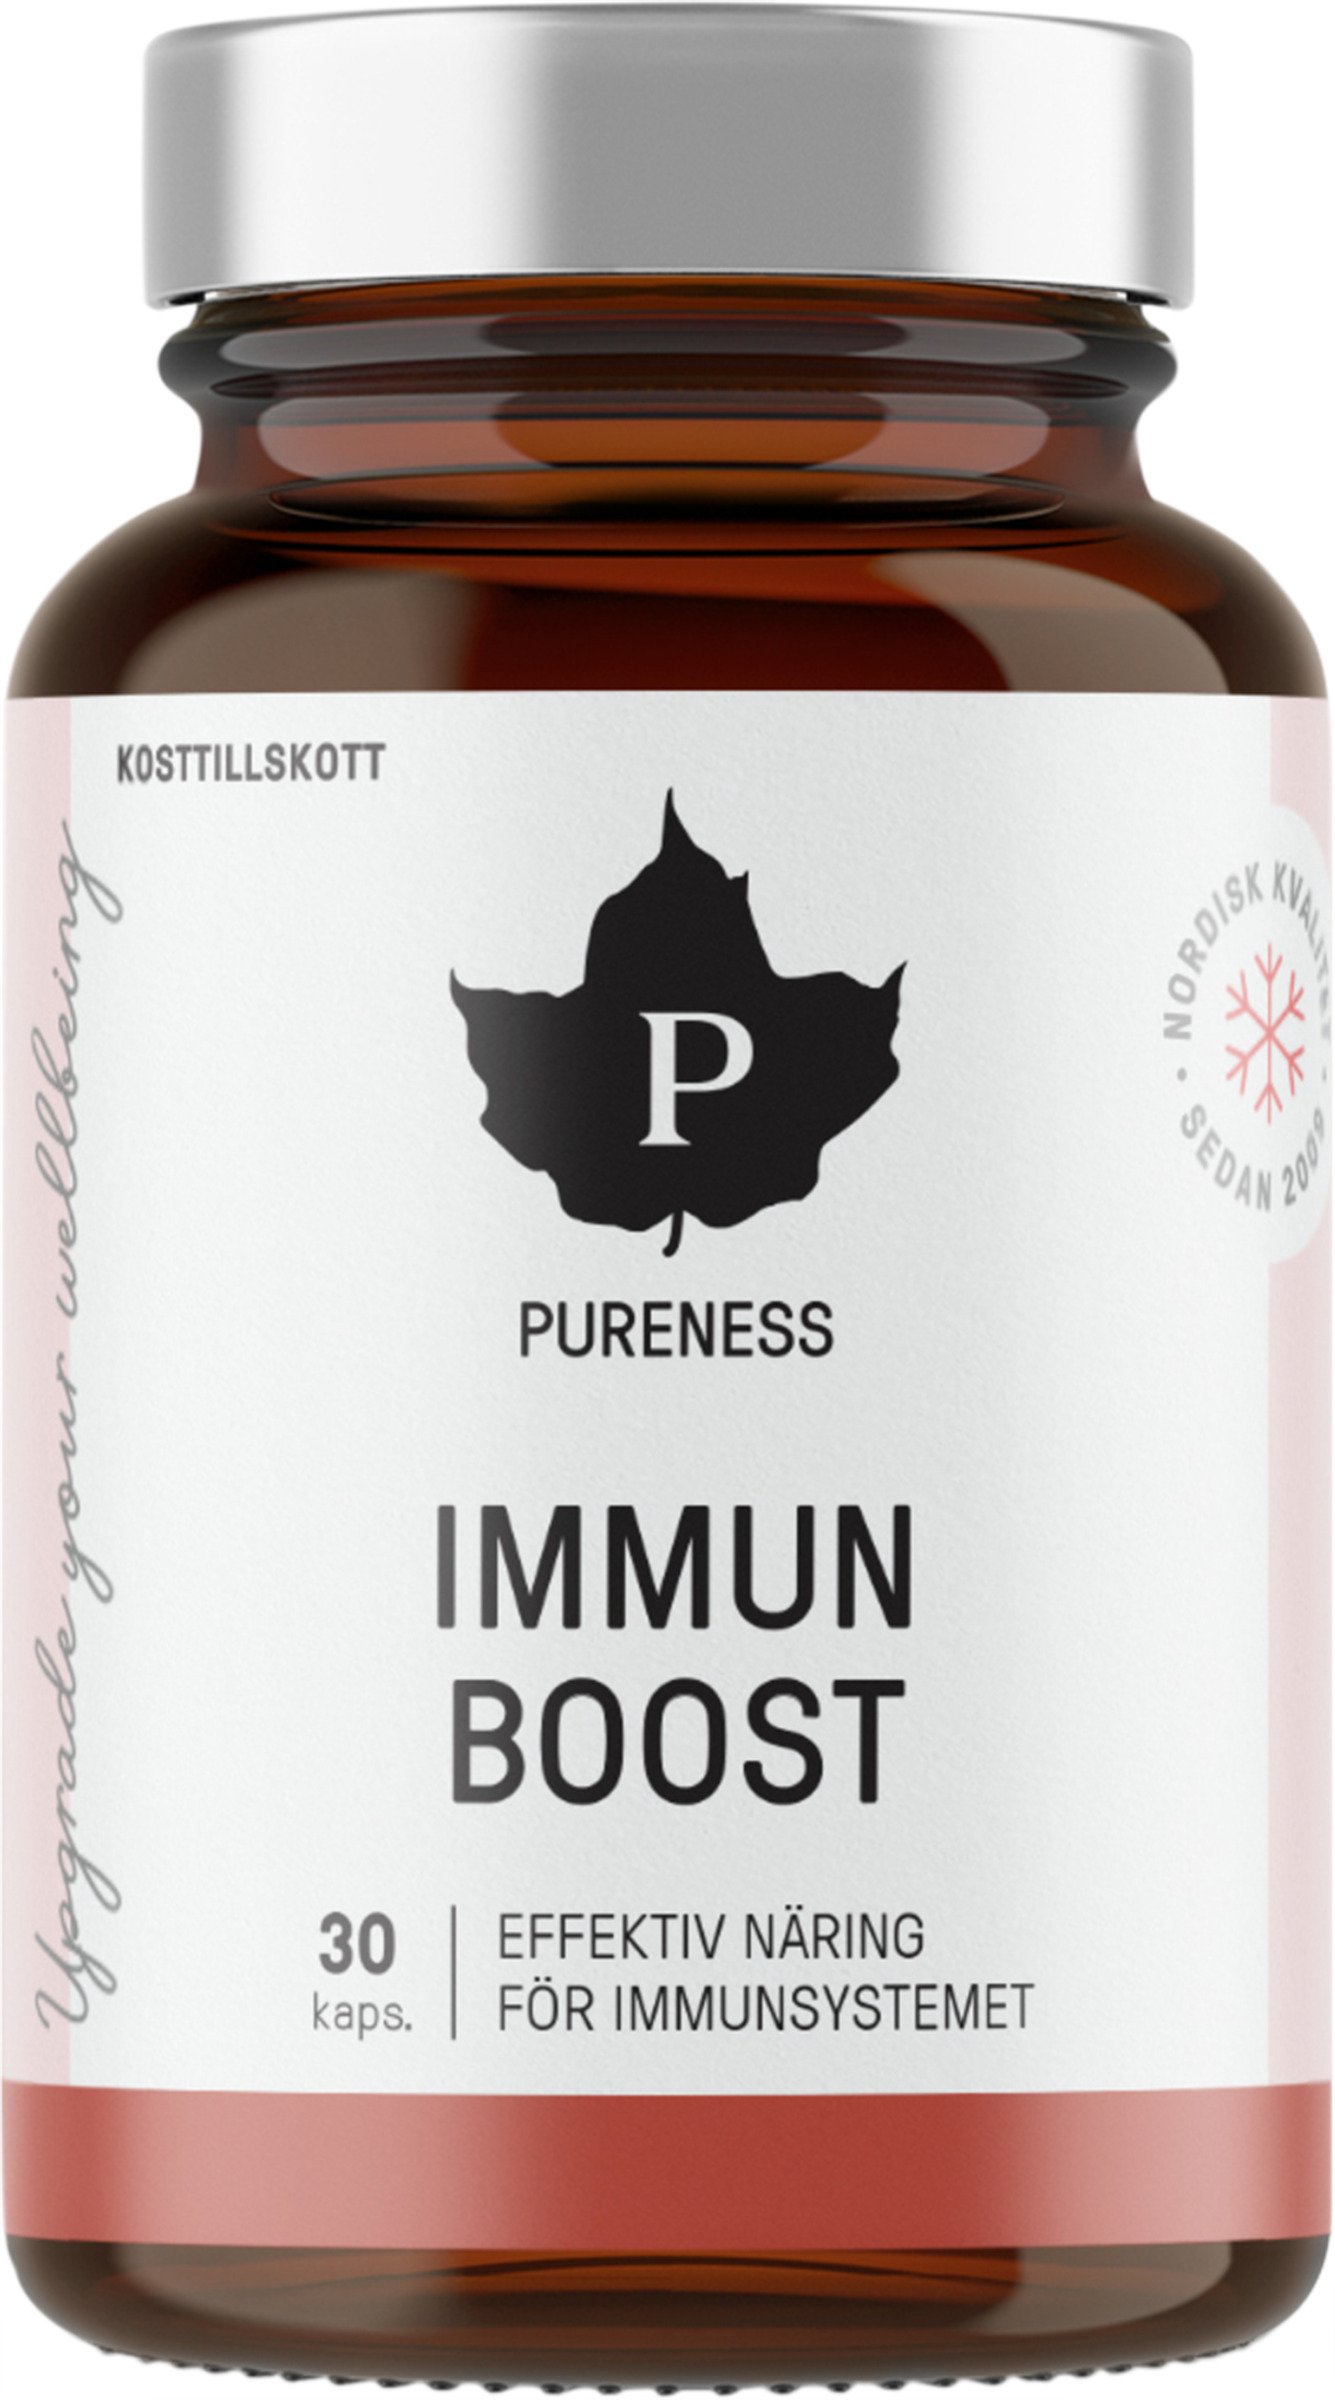 Pureness Immun Boost 30 kapslar